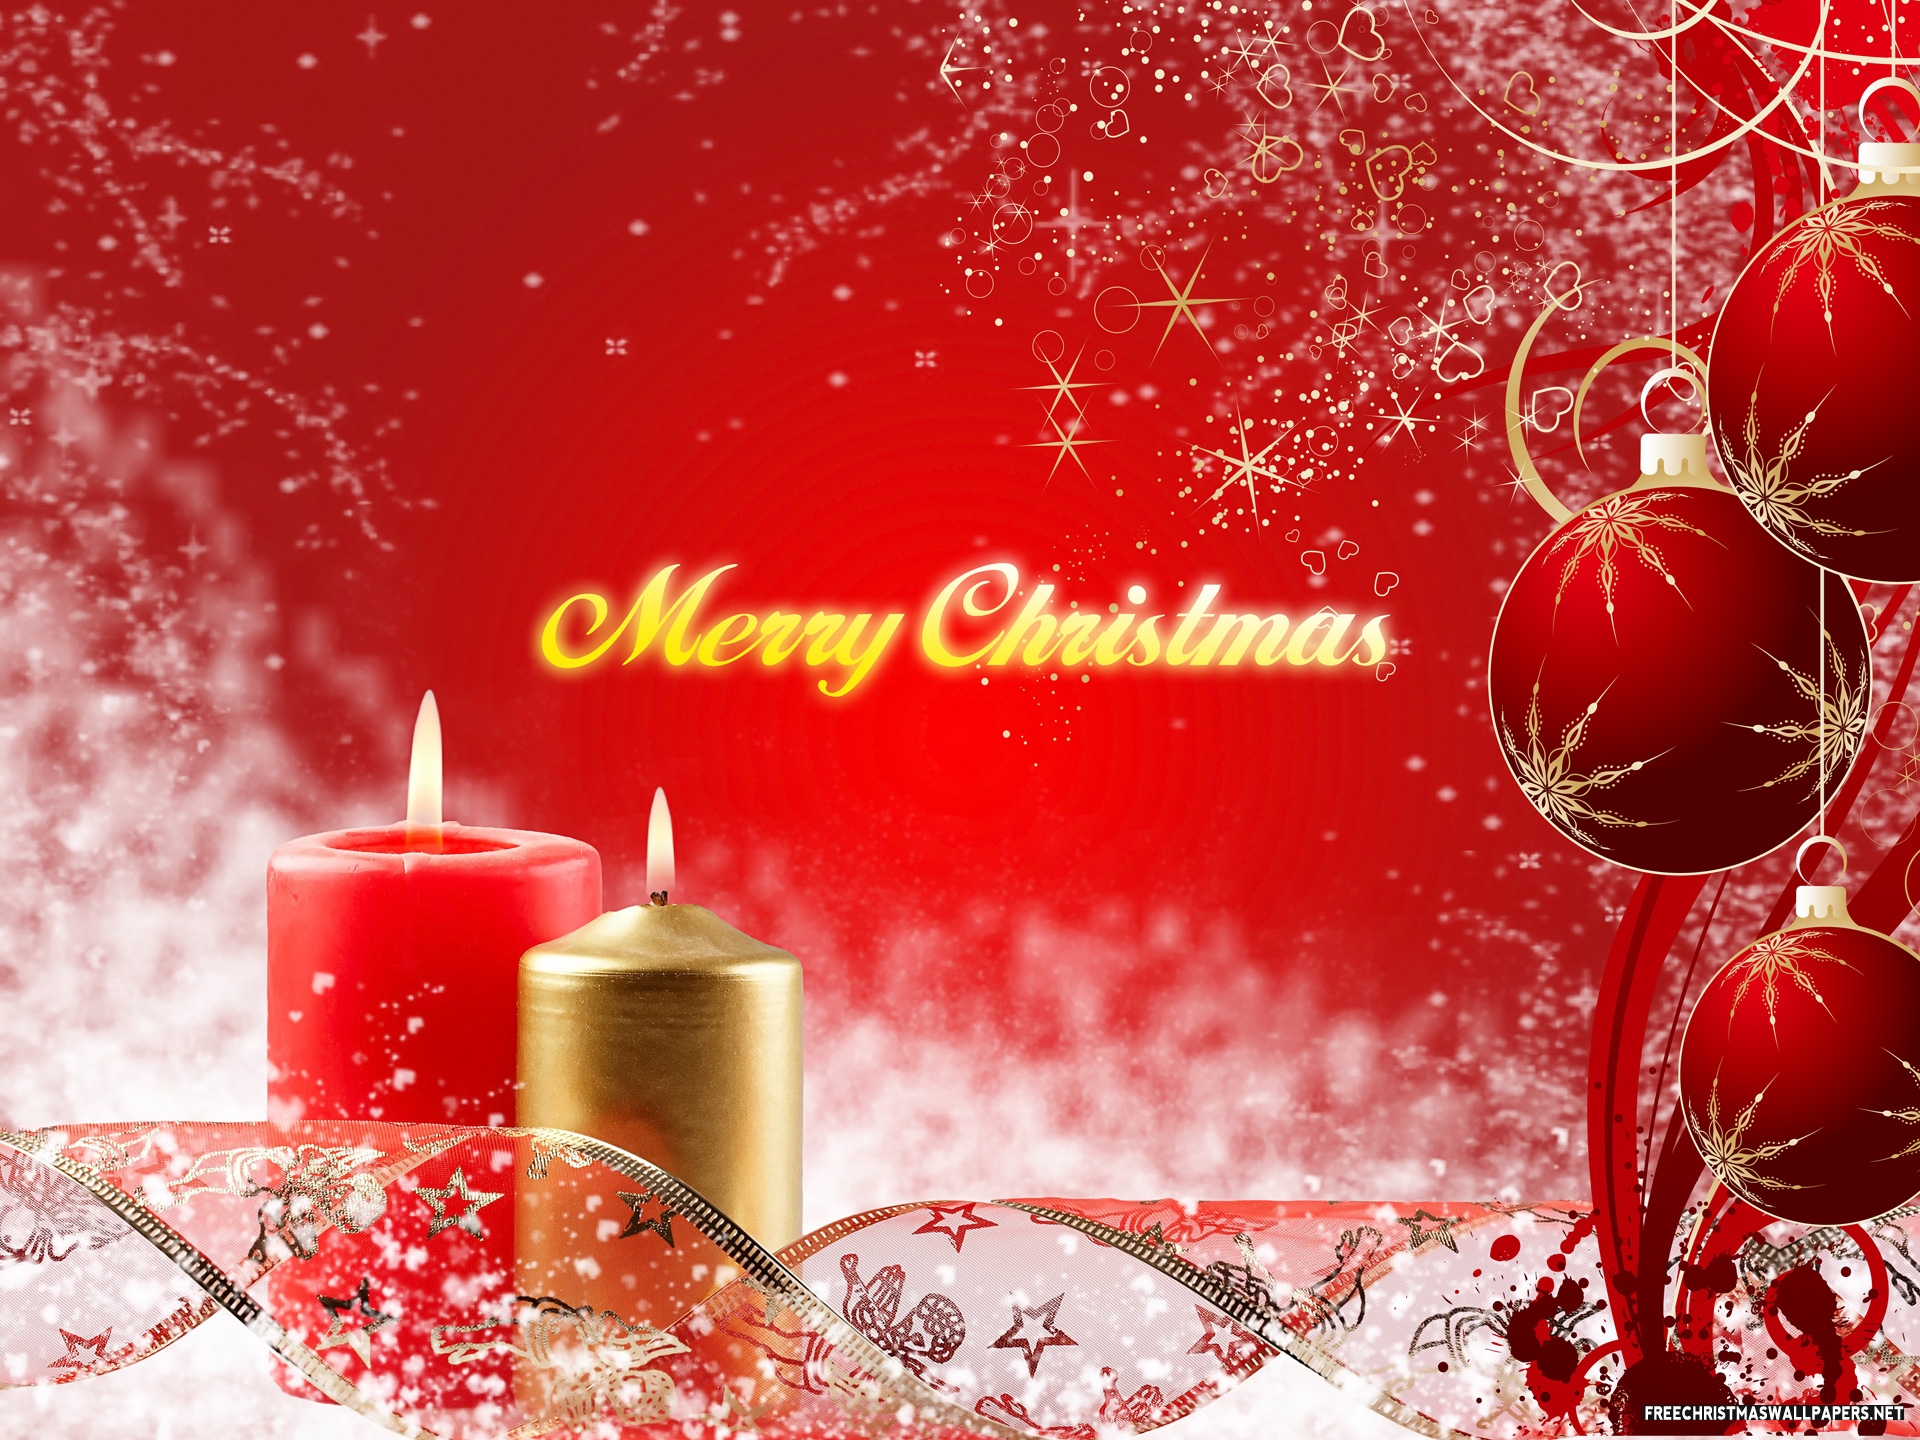 merry-christmas-candles-2180771.jpeg